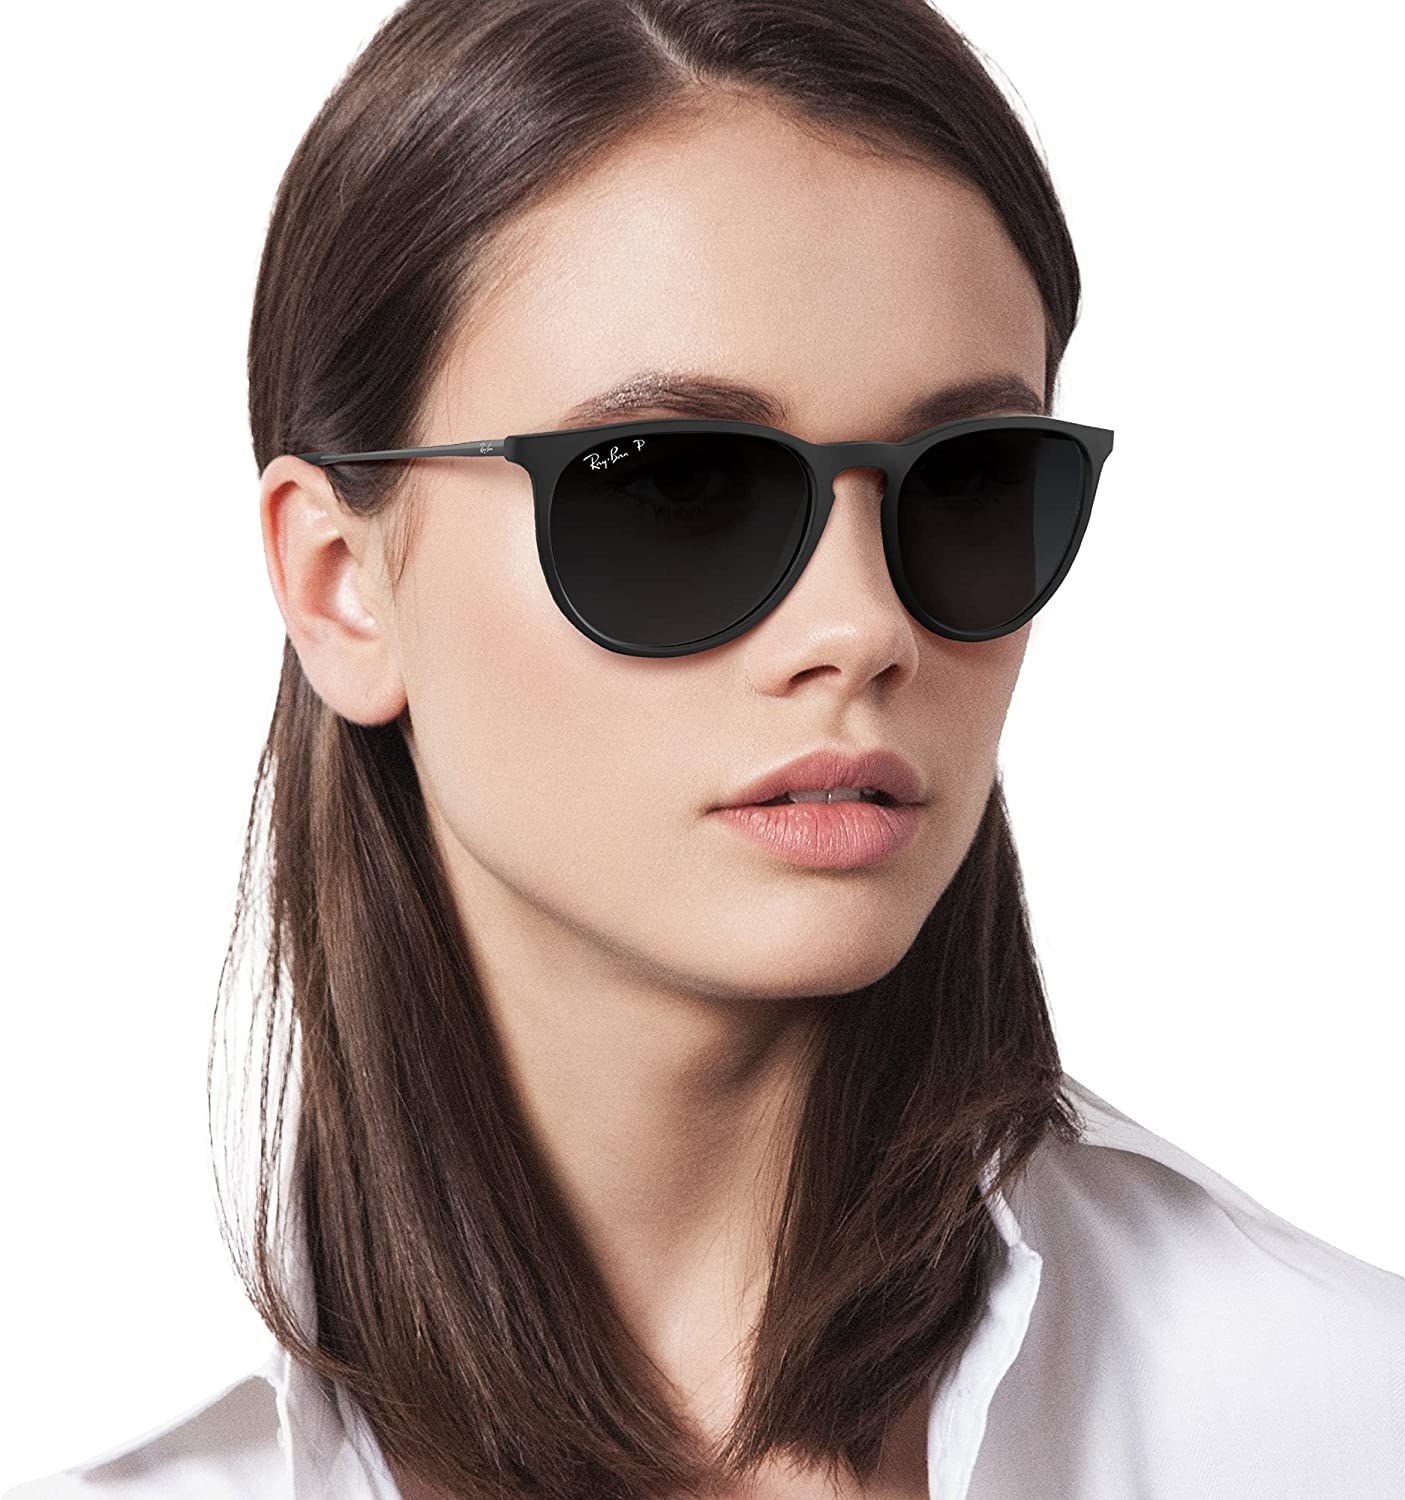 model wears black Ray-Ban sunglasses